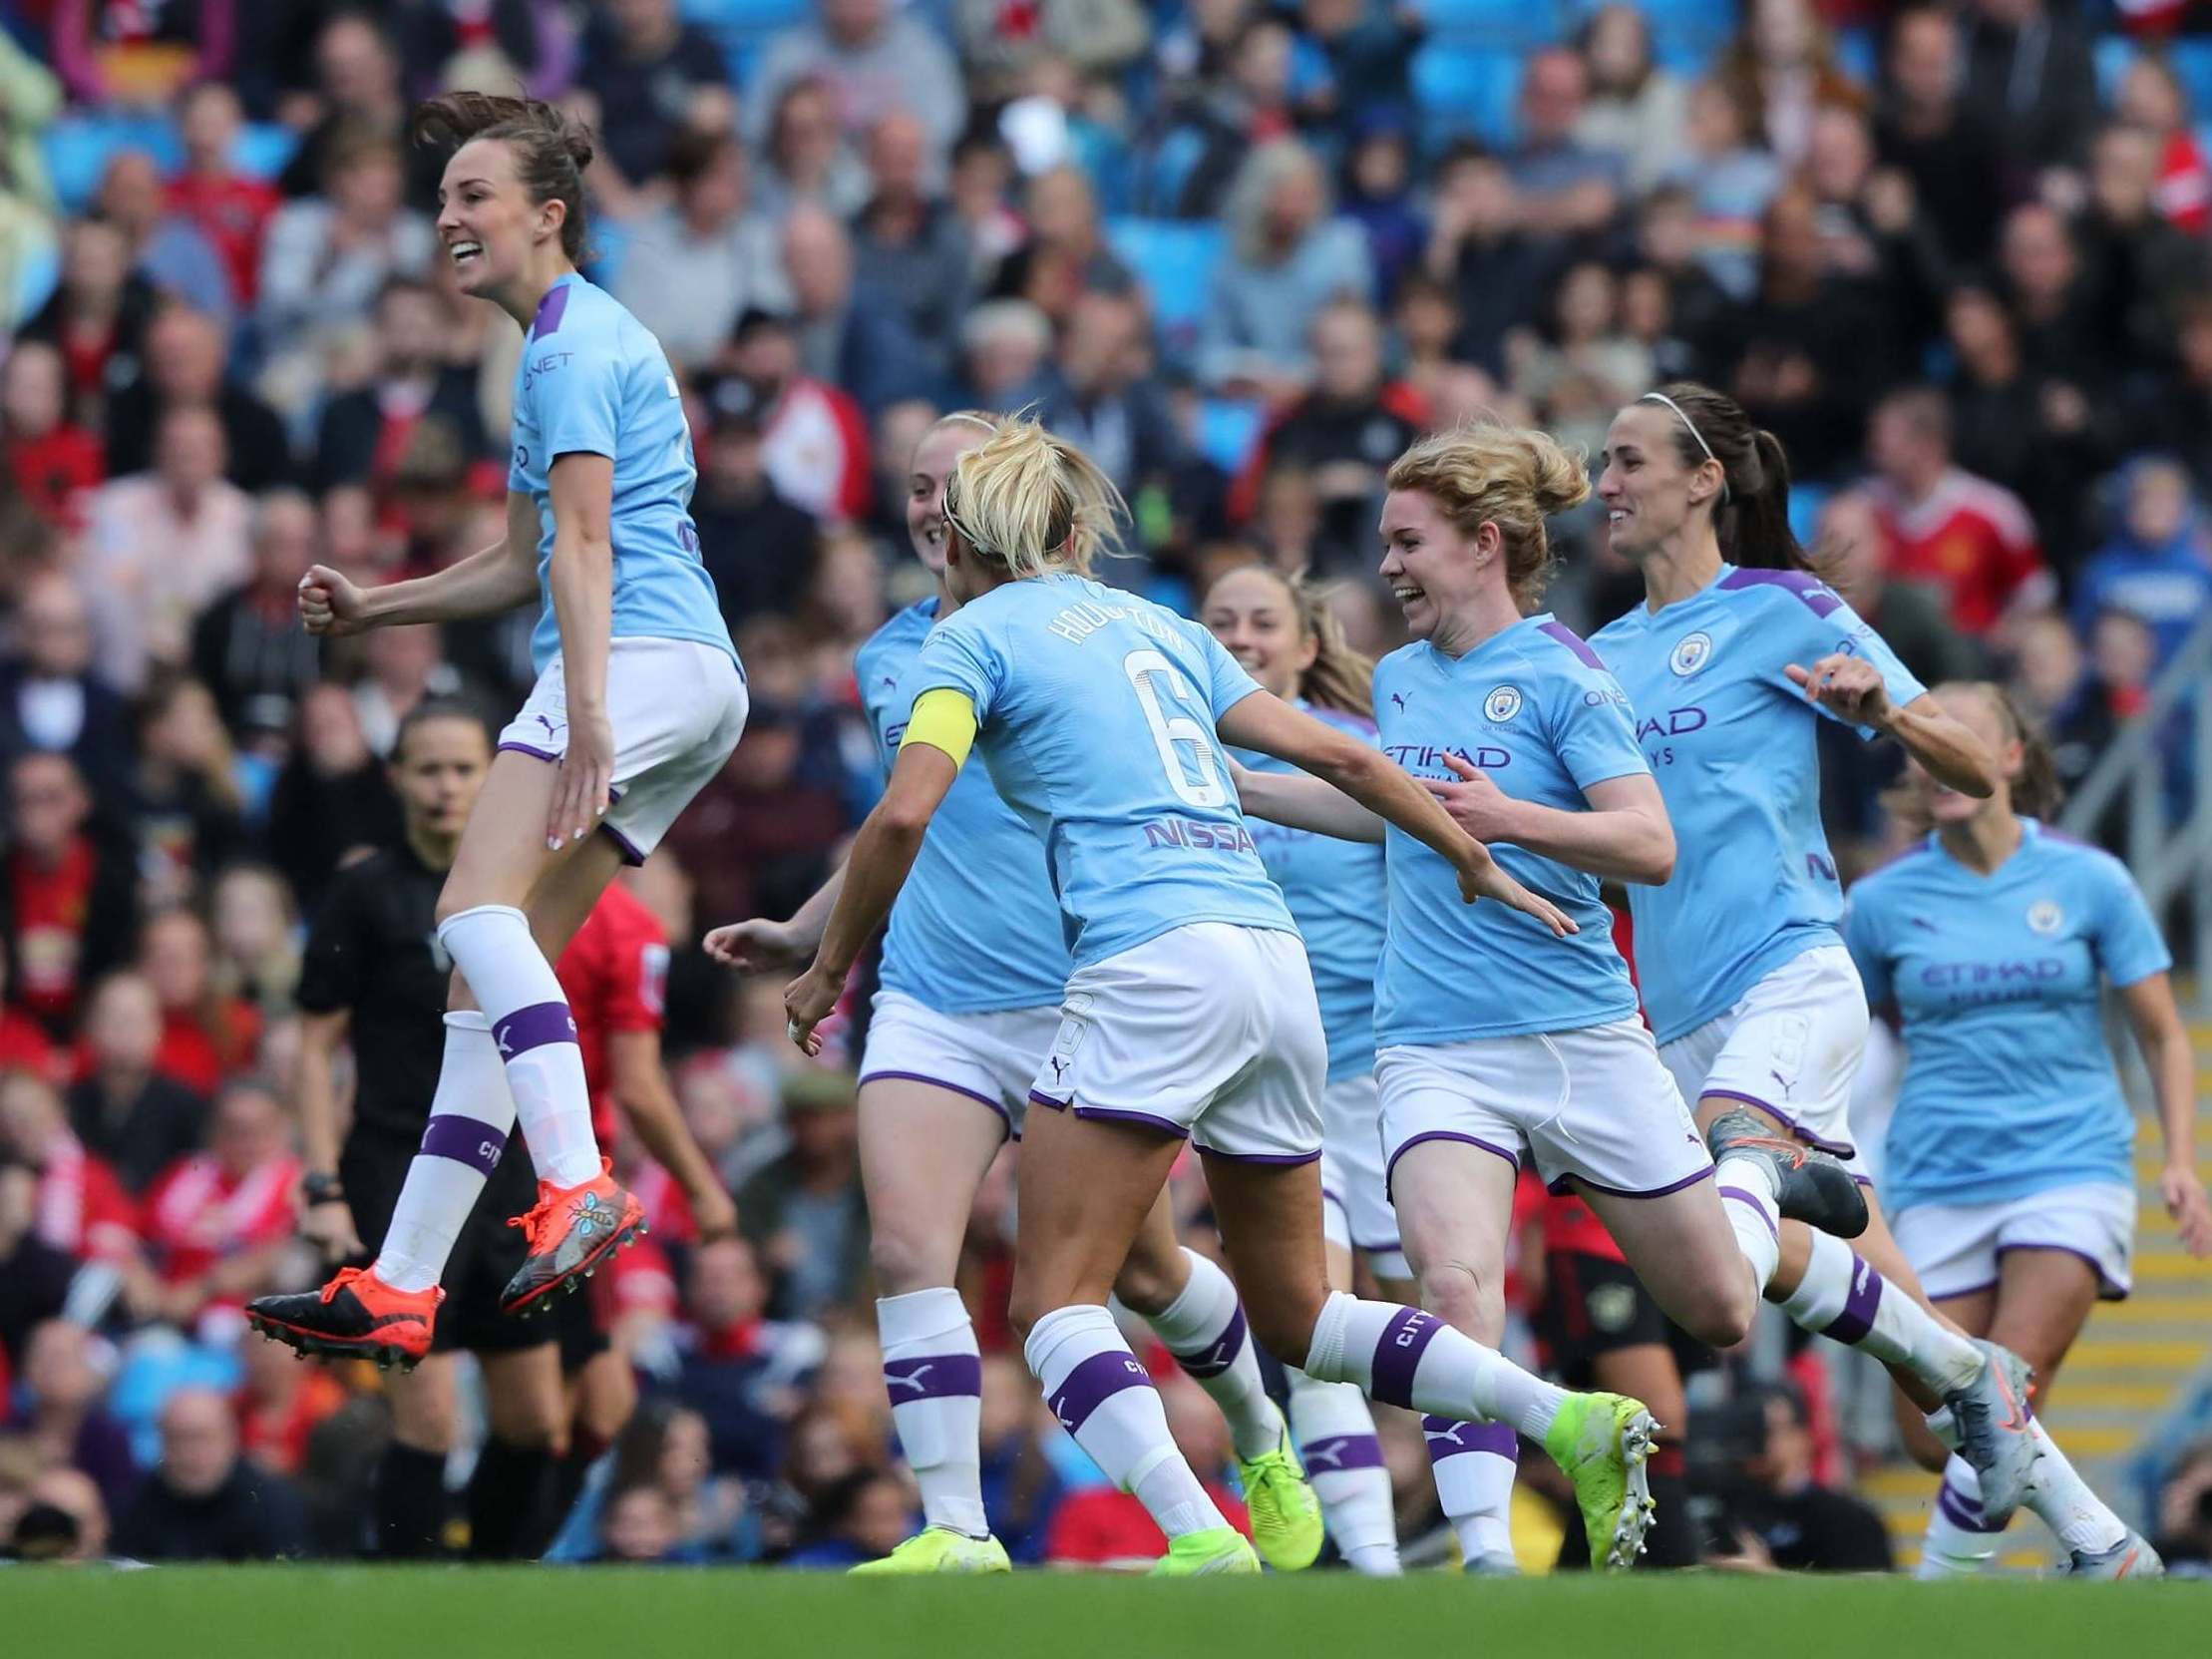 Man City vs Manchester United: Caroline Weir wondergoal lights up record day for women's game